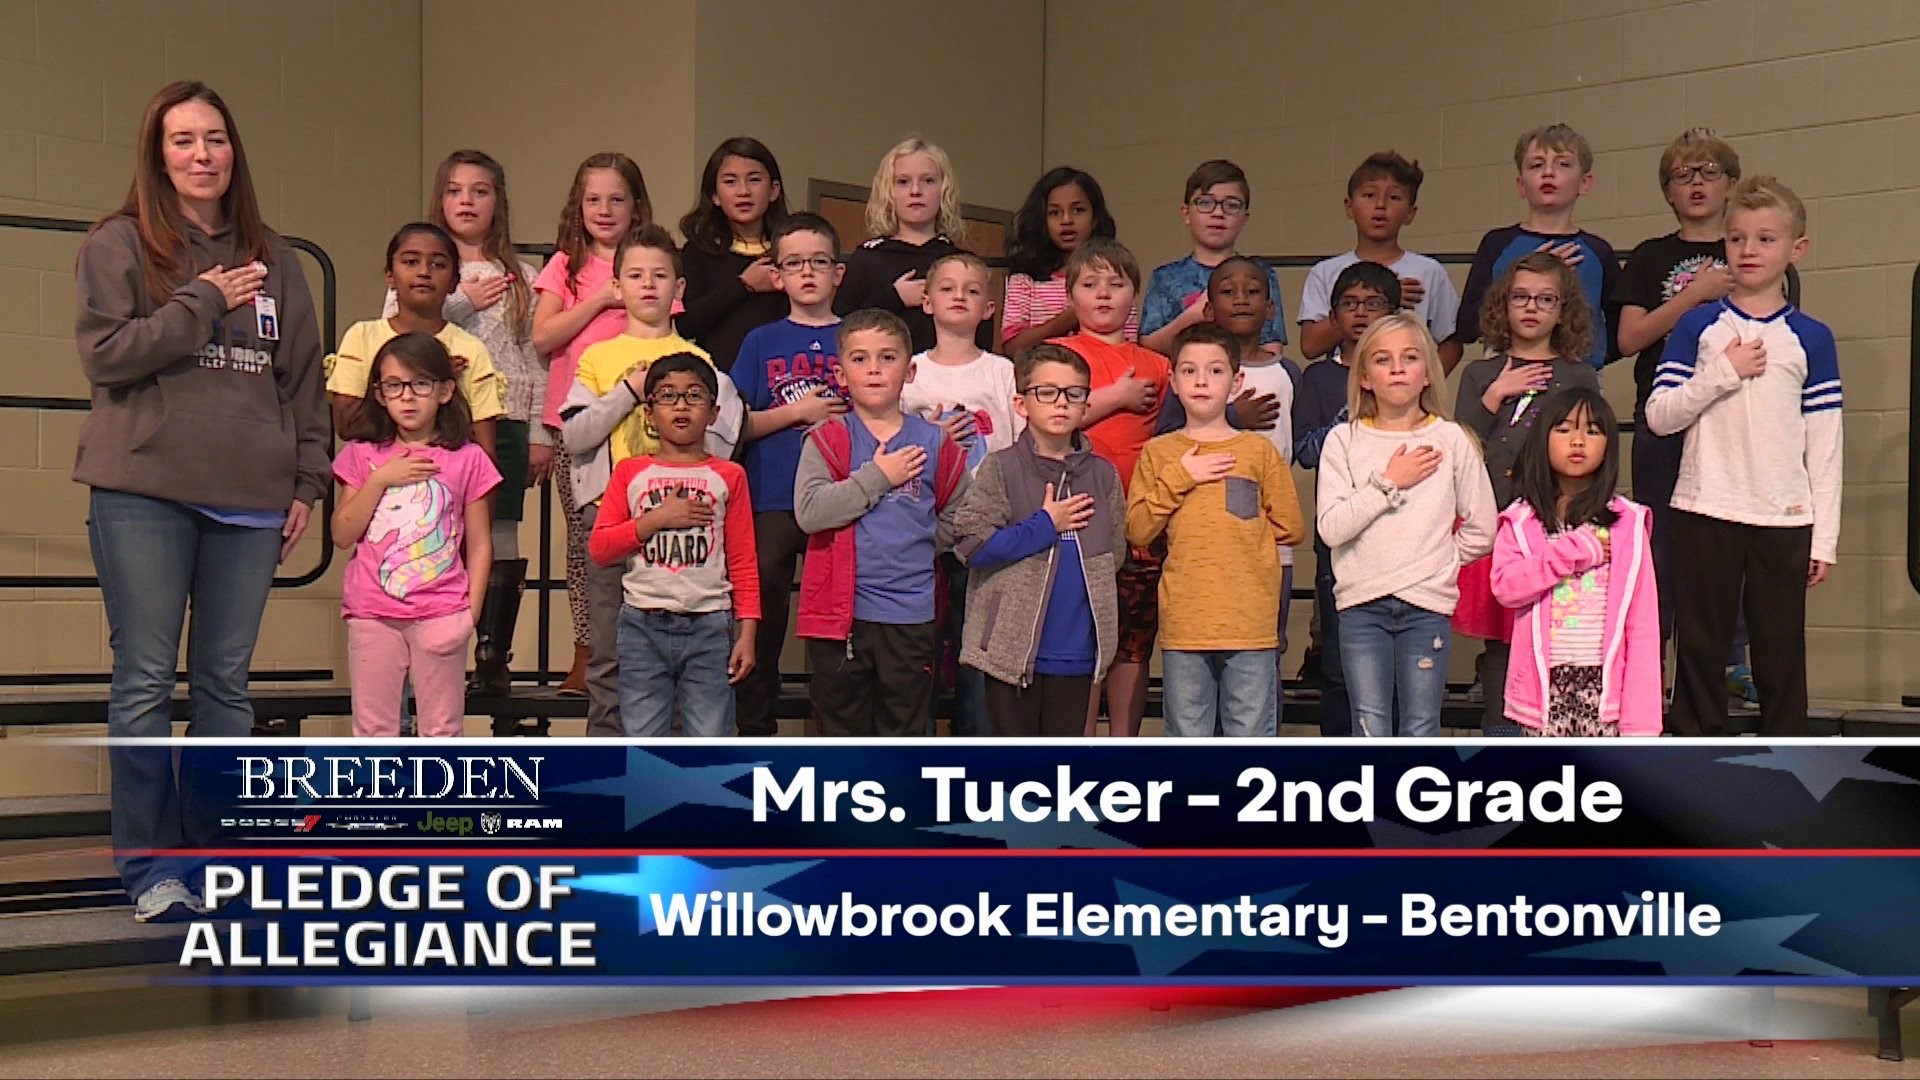 Mrs. Tucker 2nd Grade Willowbrook Elementary, Bentonville